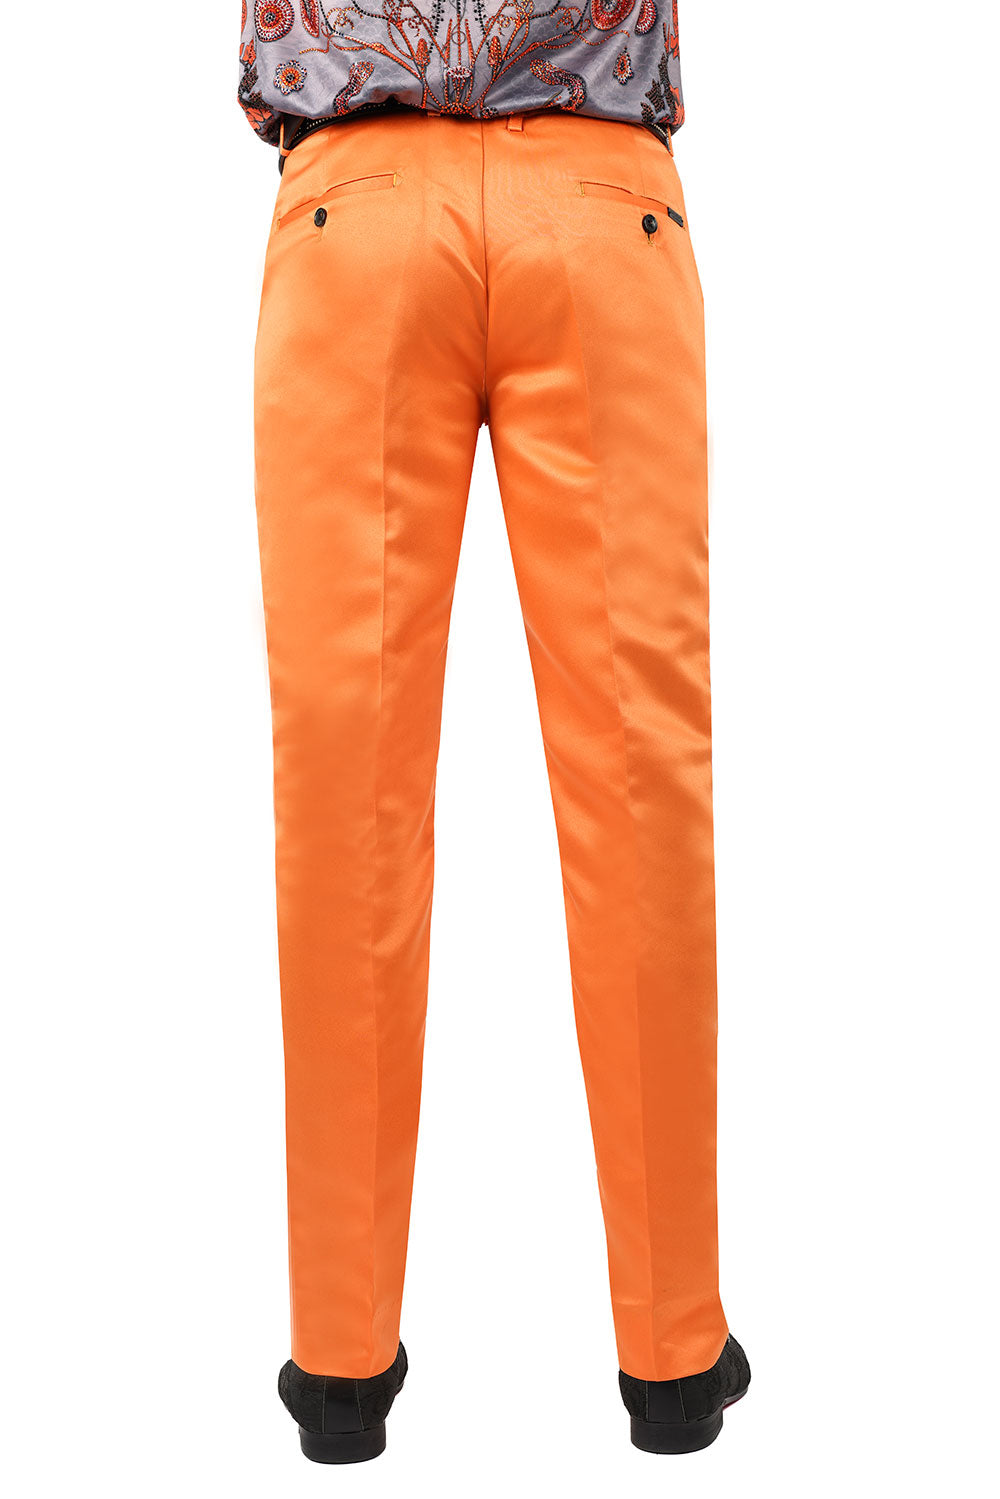 BARABAS Men's Solid Color Plain Shiny Chino Dress Pants 3CP02 Orange